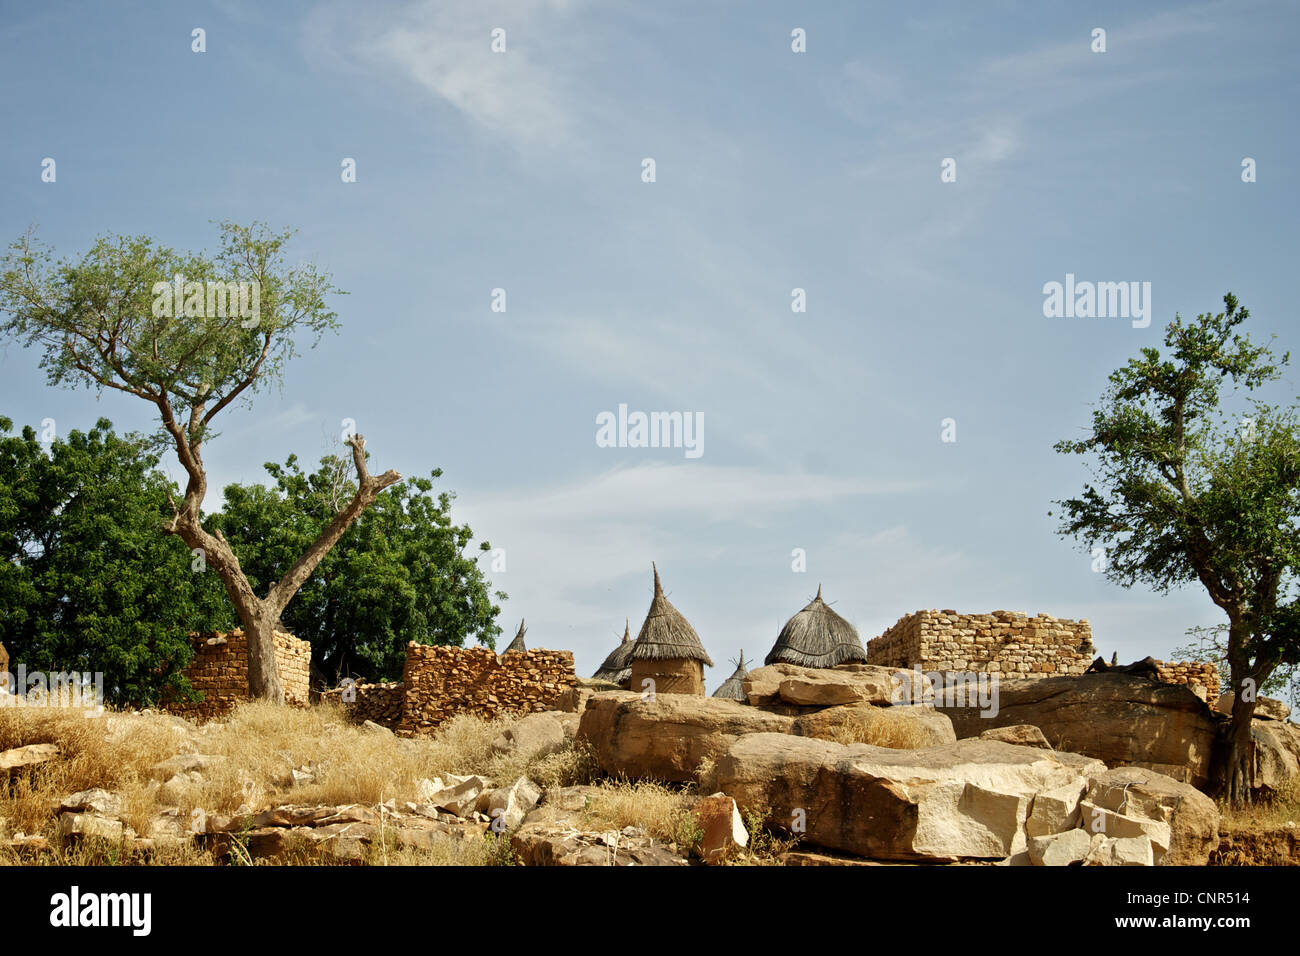 A rural village in Dogon County, Mali. Stock Photo